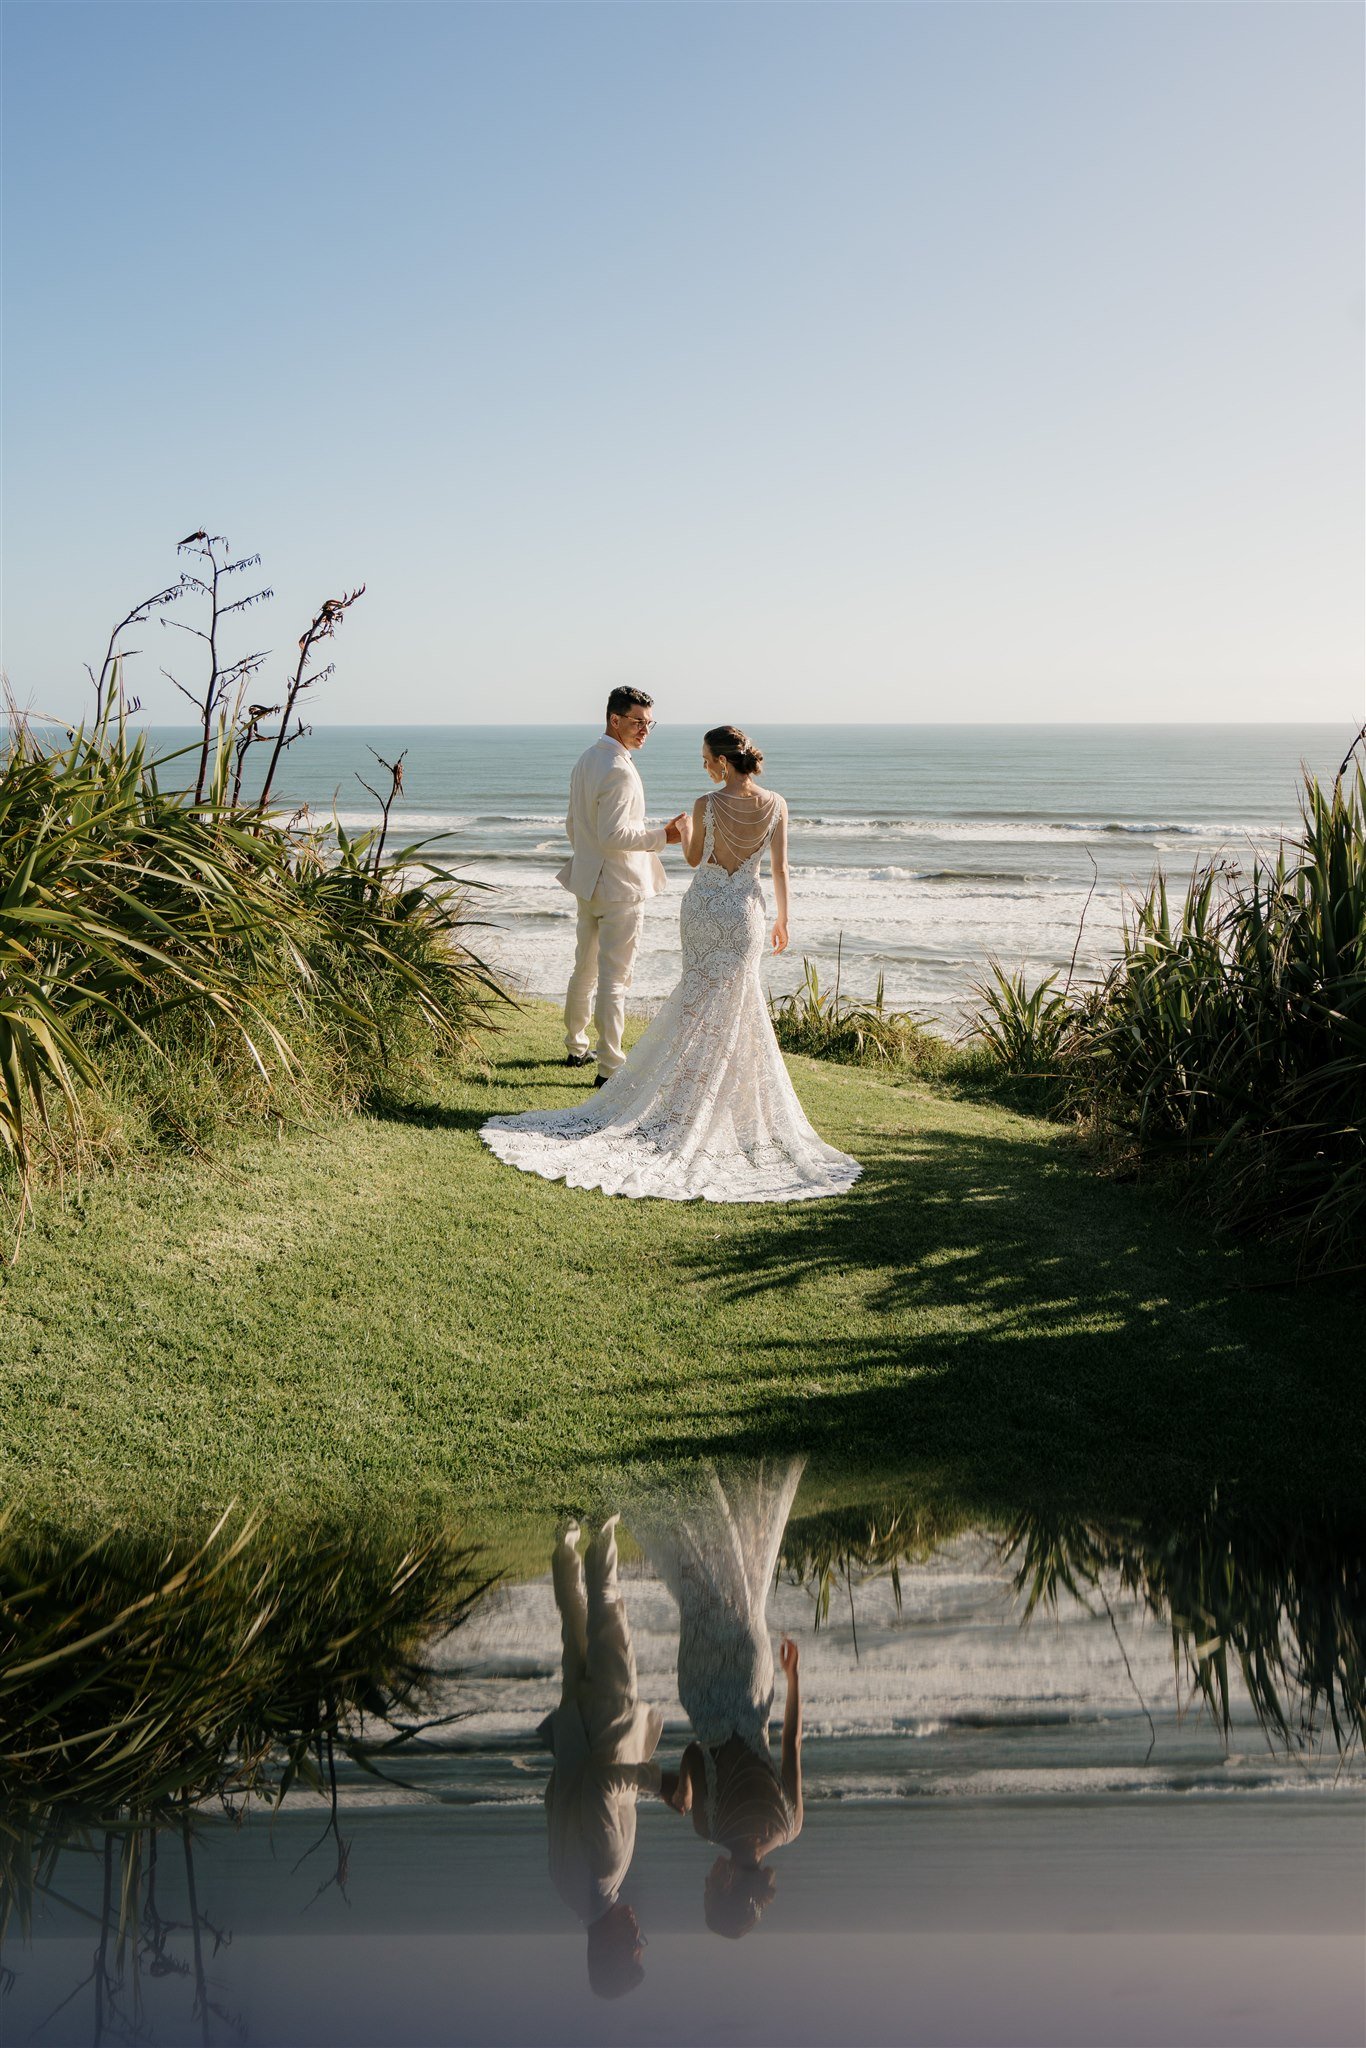 castaways-NZ-new-zealand-auckland-wedding-photographer-photography-videography-film-dear-white-productions-best-venue-waiuku-engagement-elopement-style-beach-intimate (238).jpg